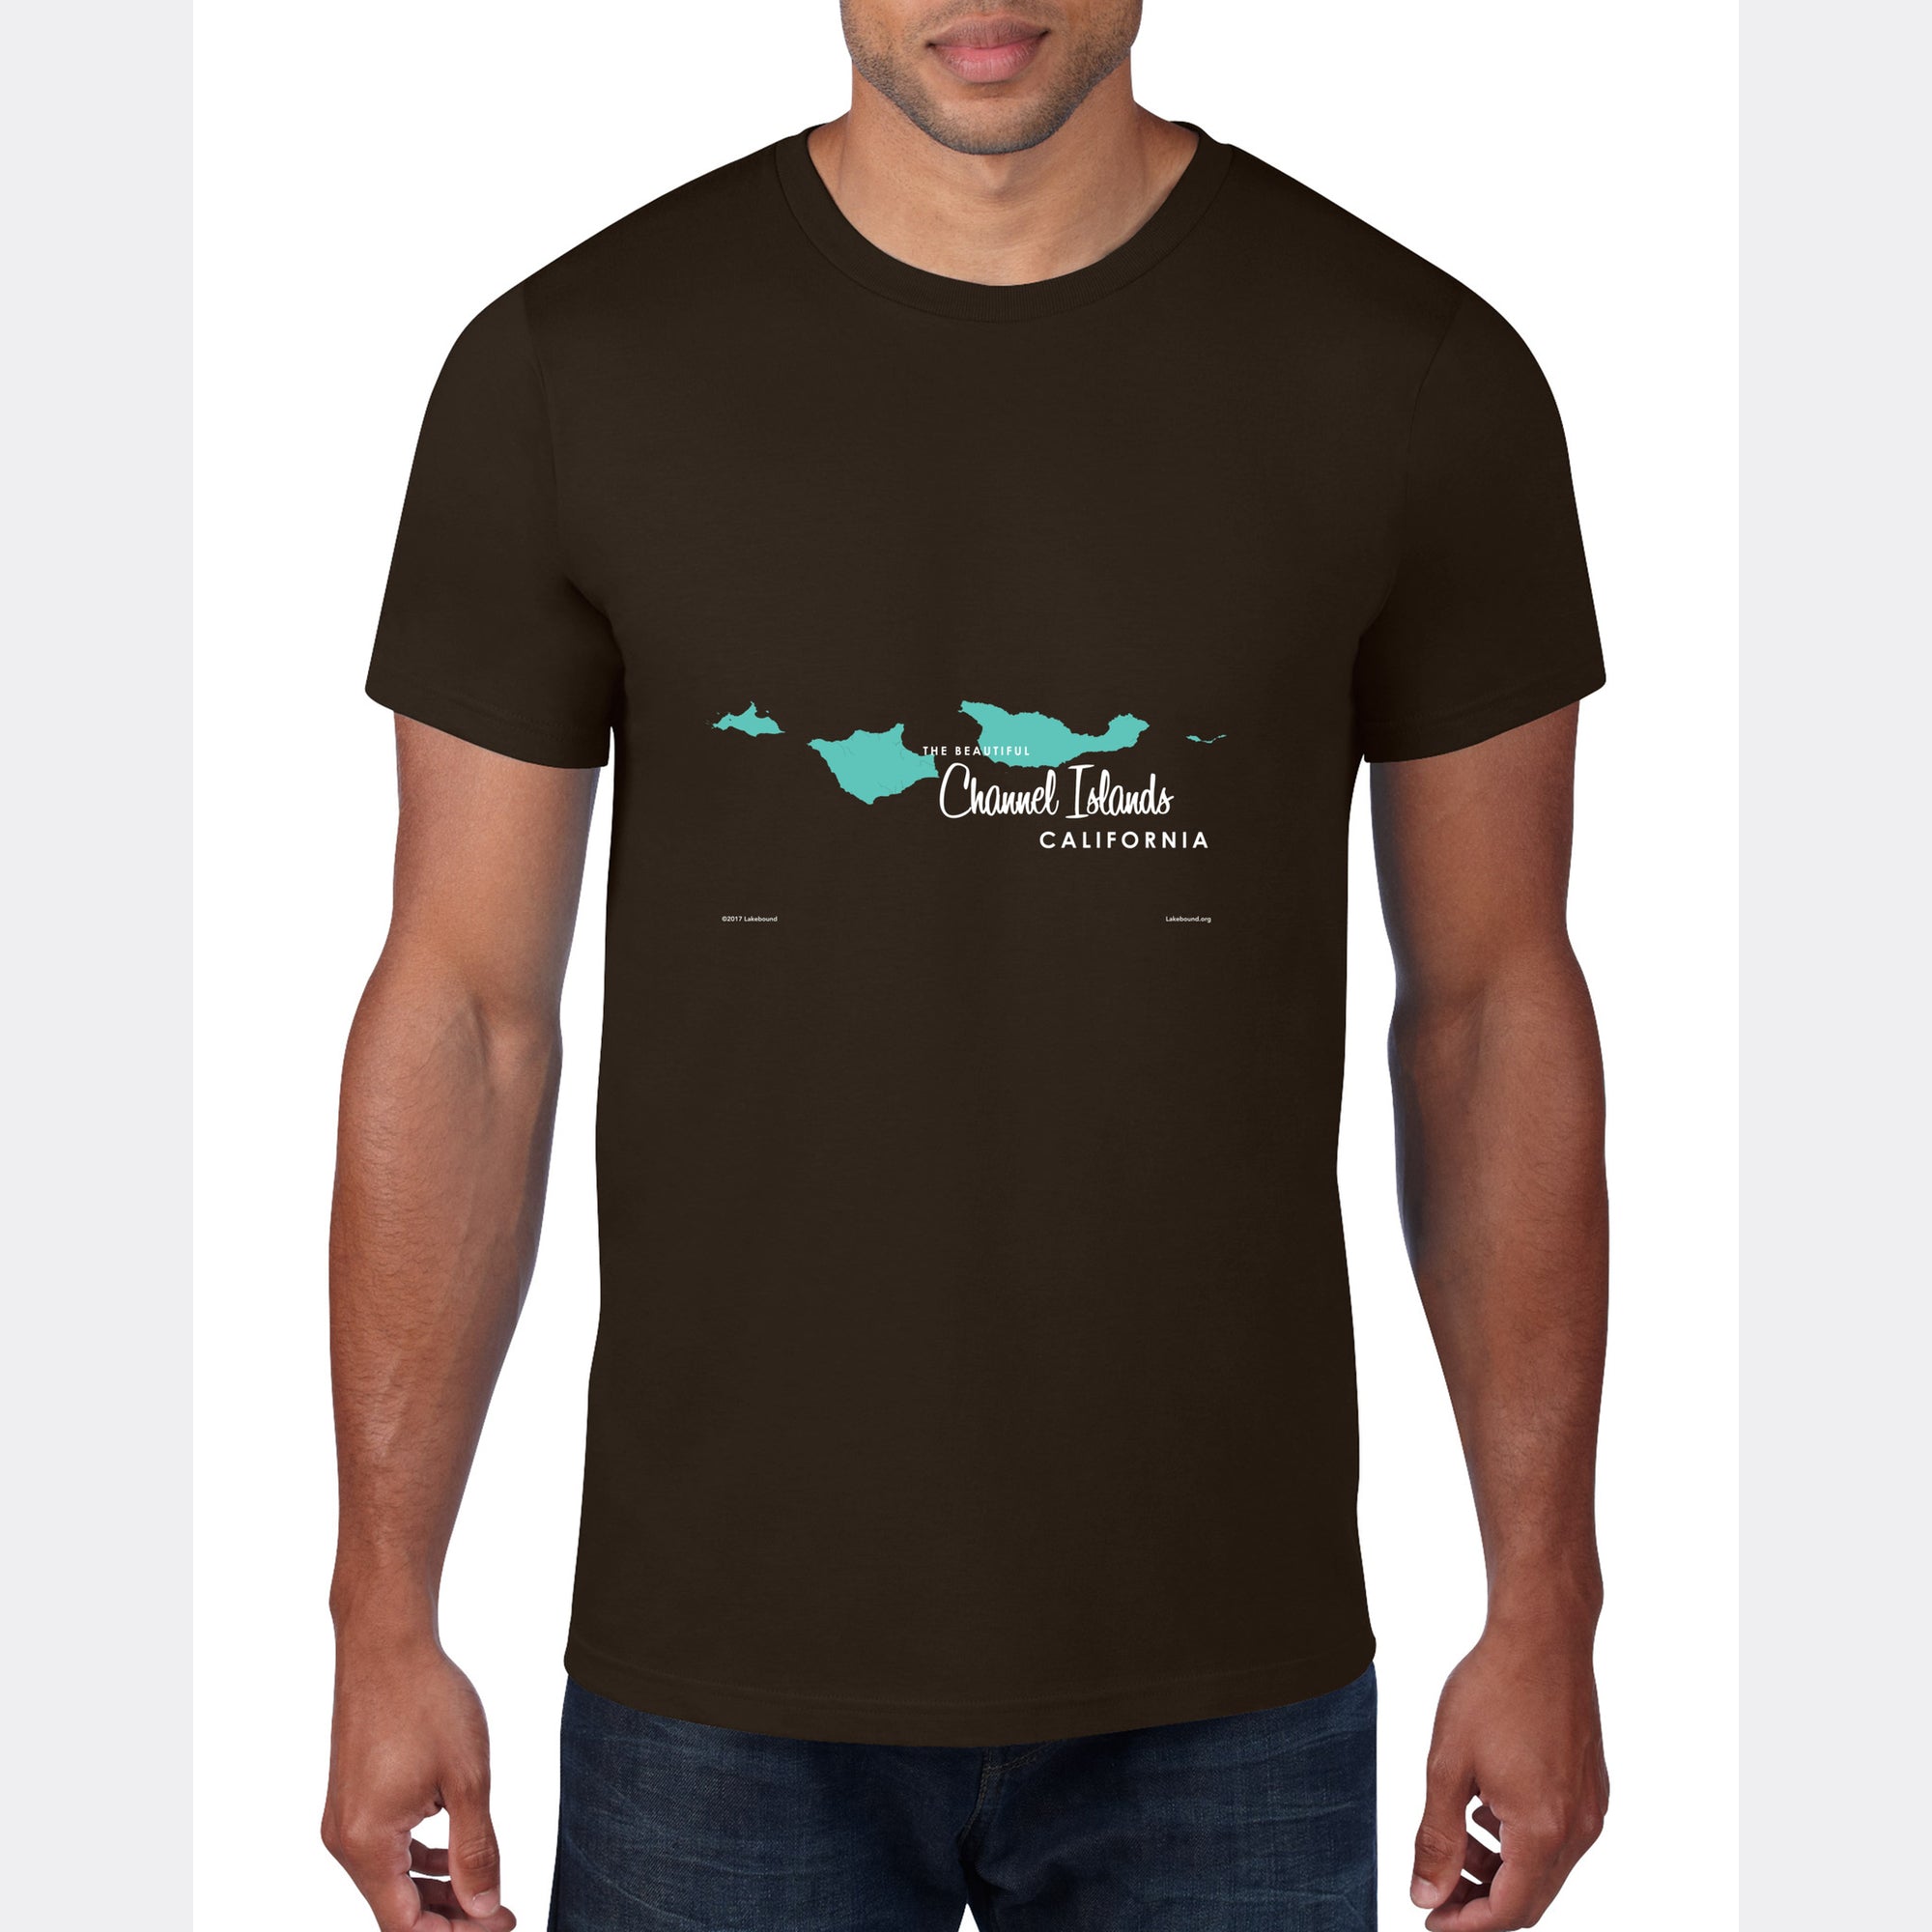 Channel Islands California, T-Shirt